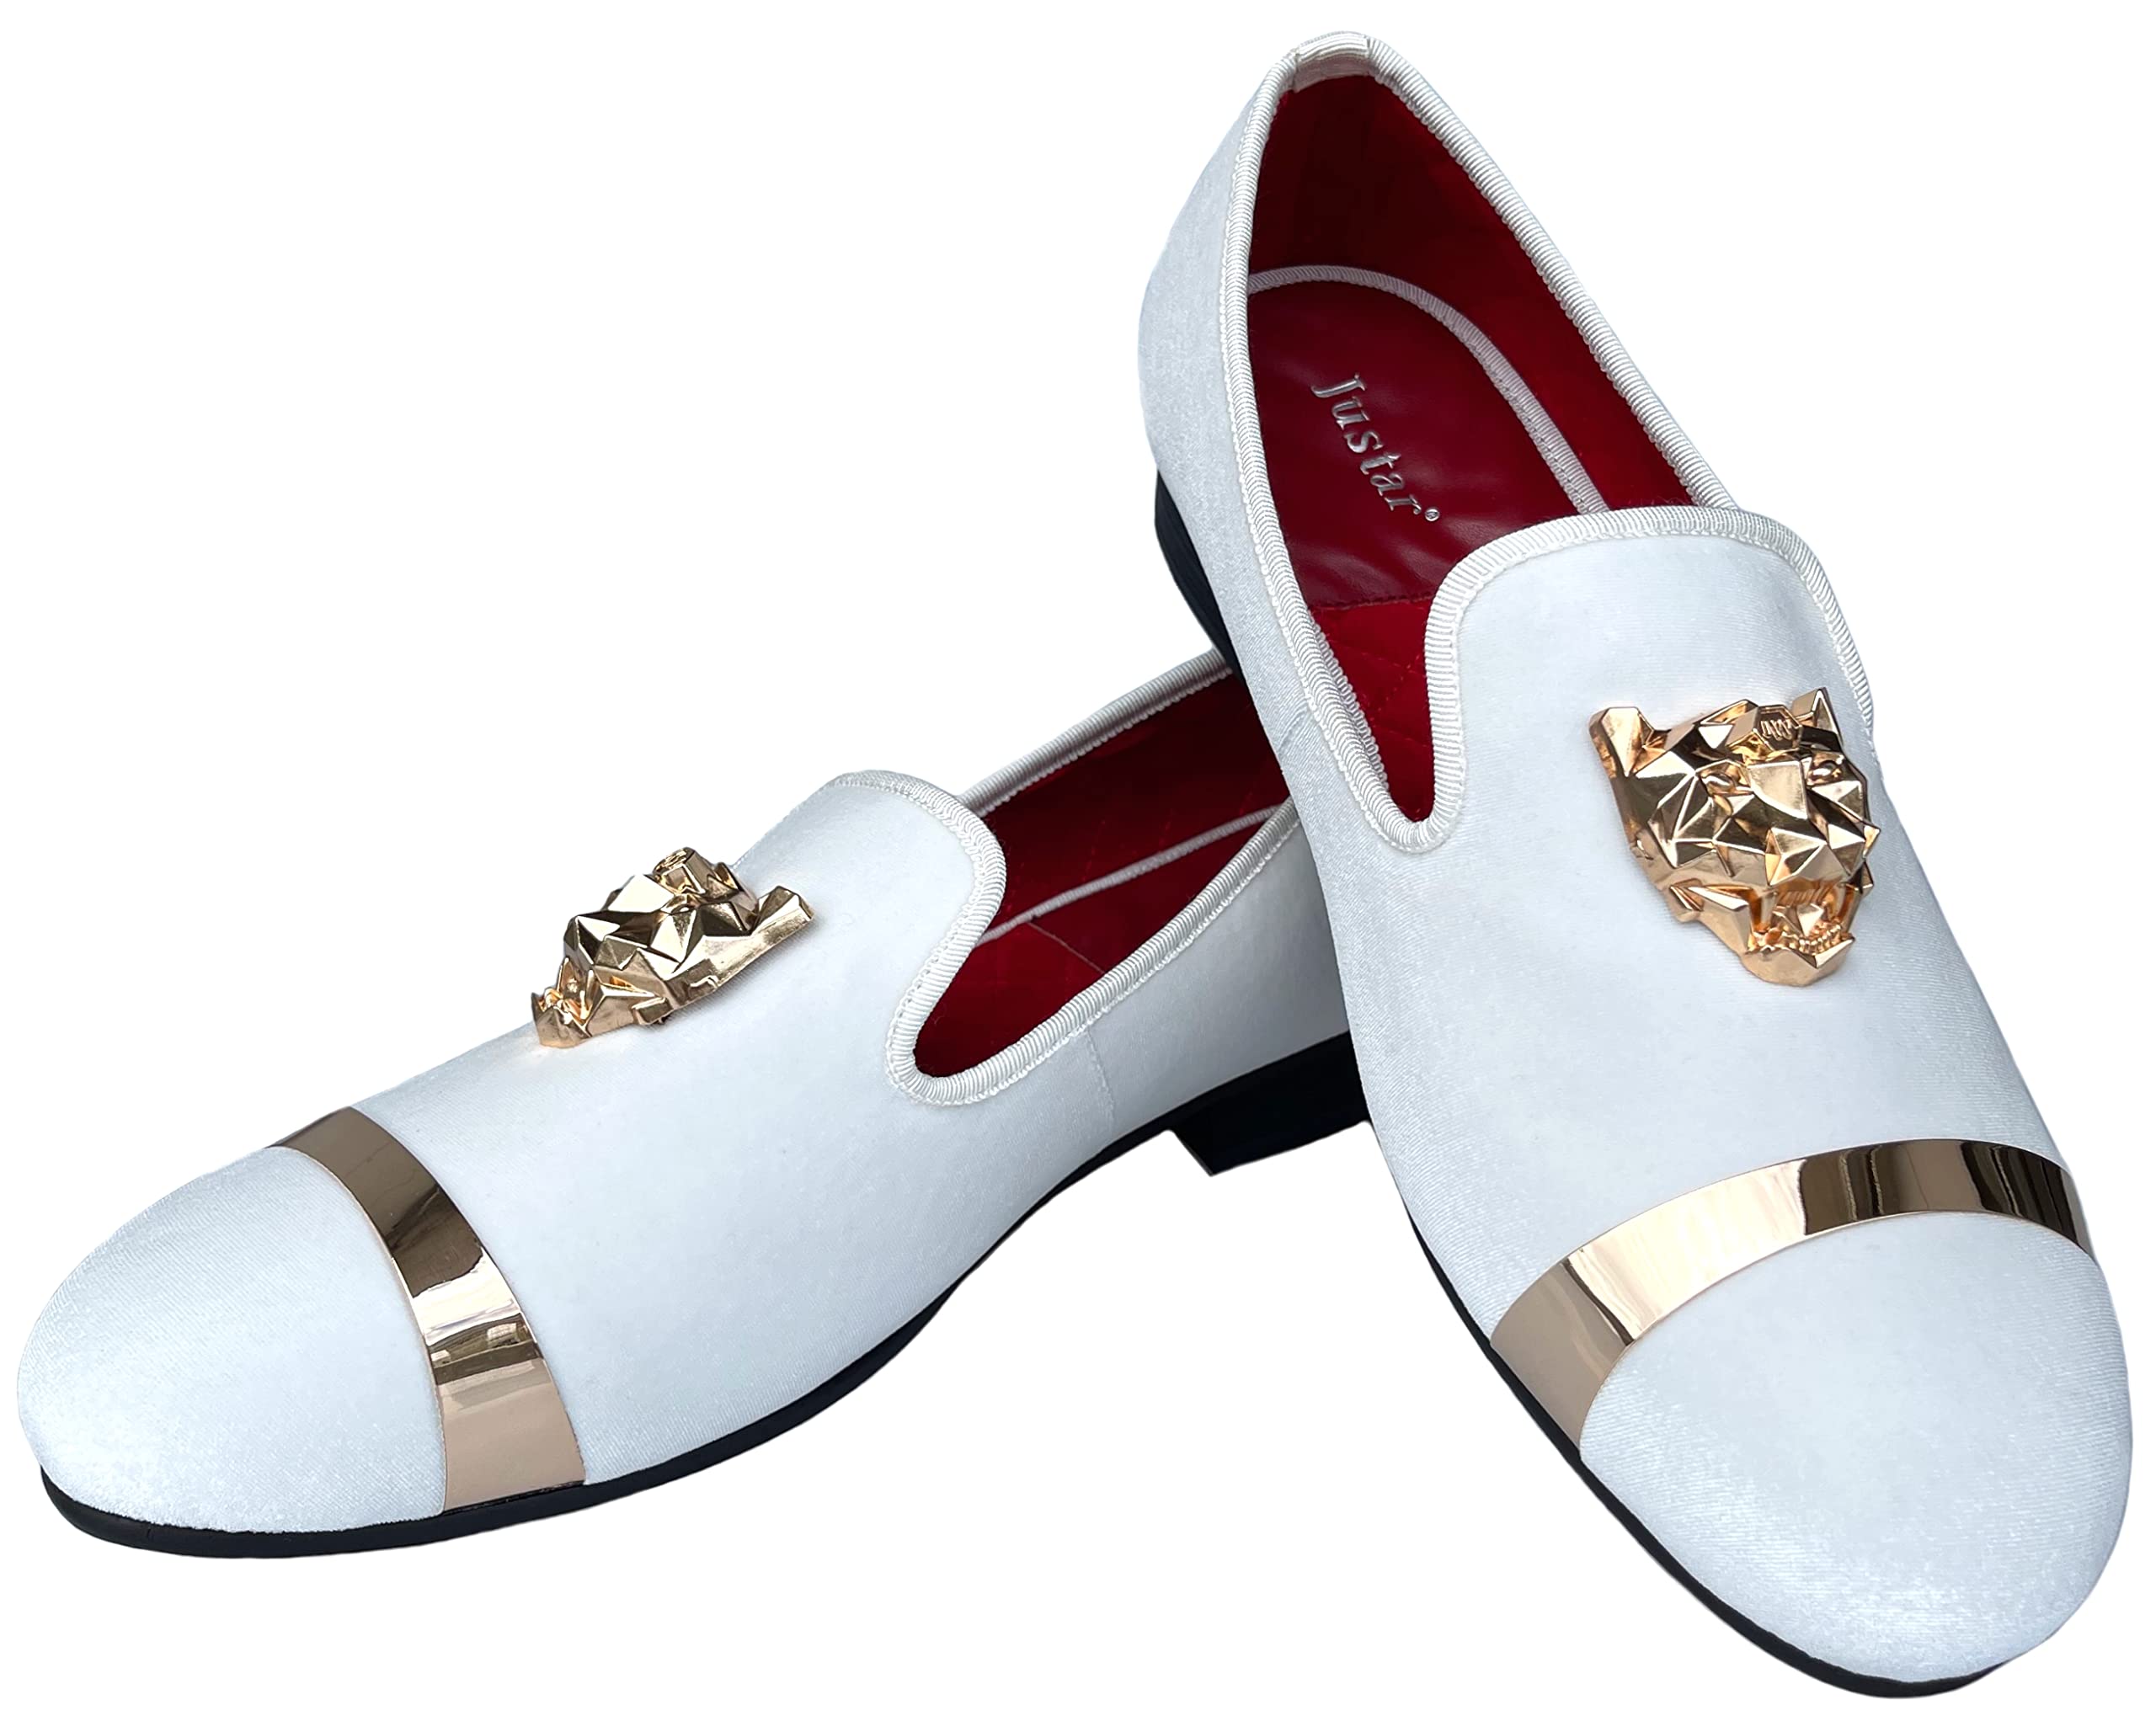 Justar Men's Black Velvet Loafers Slip-on Dress Shoes with Gold Buckle Slippers Flats